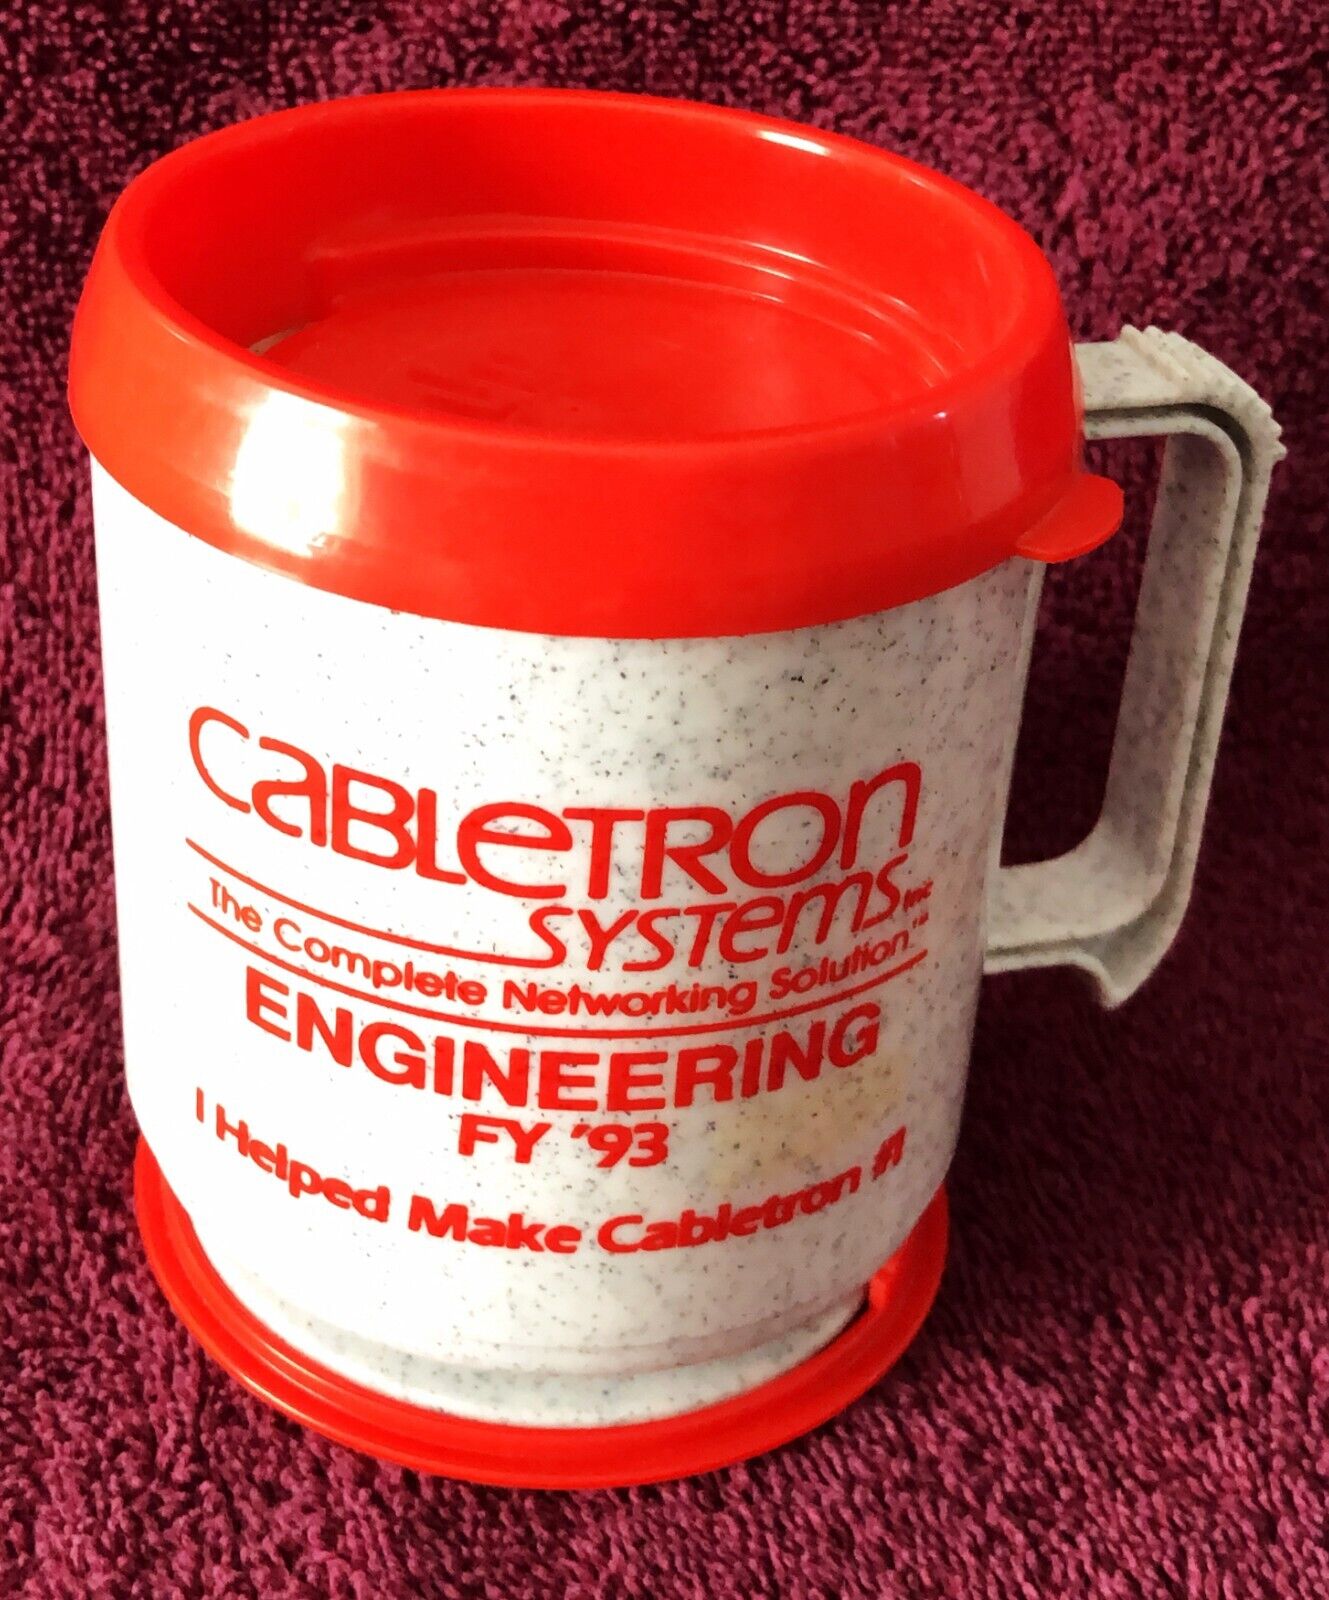 Vintage Cabletron Systems Coffee Tea Mug Cup